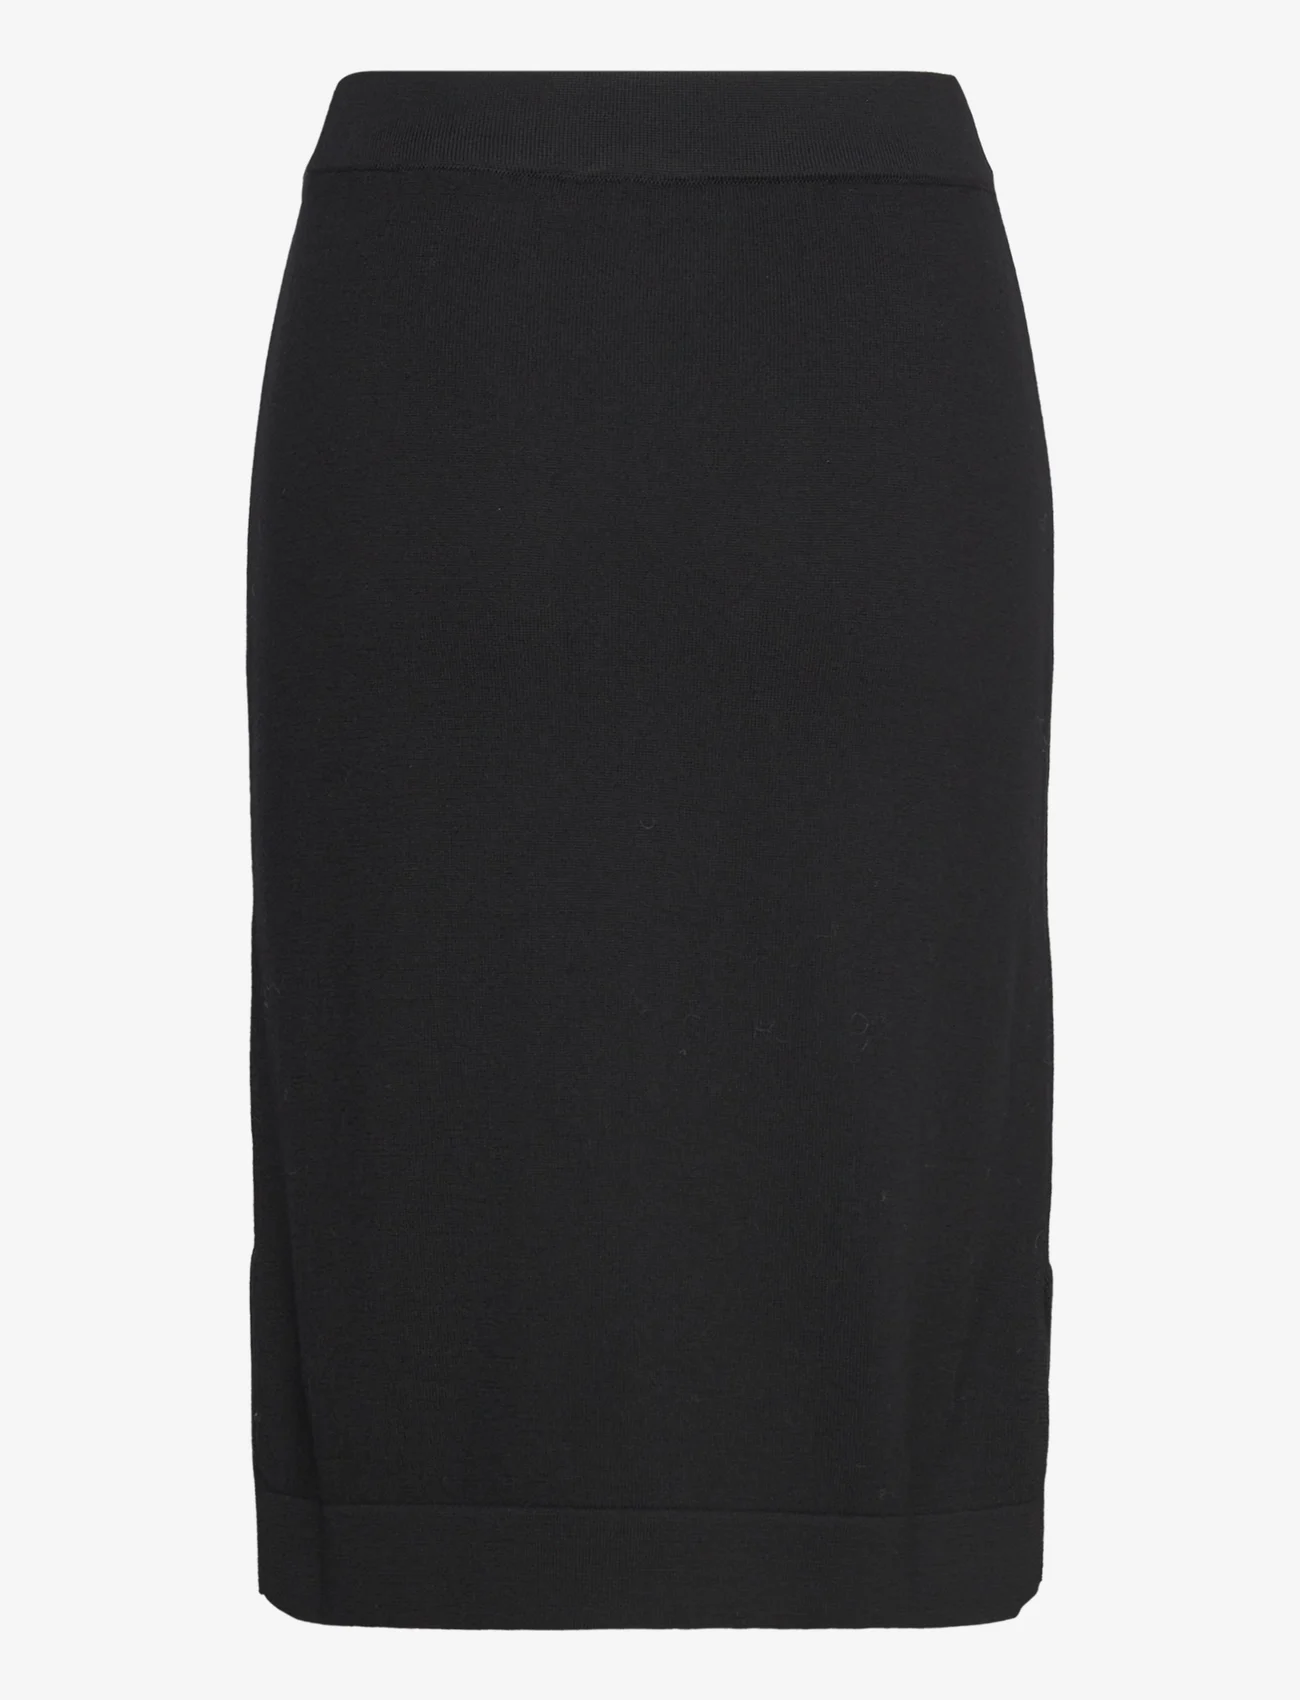 BUSNEL - LIBERTY skirt - stickade kjolar - black - 1